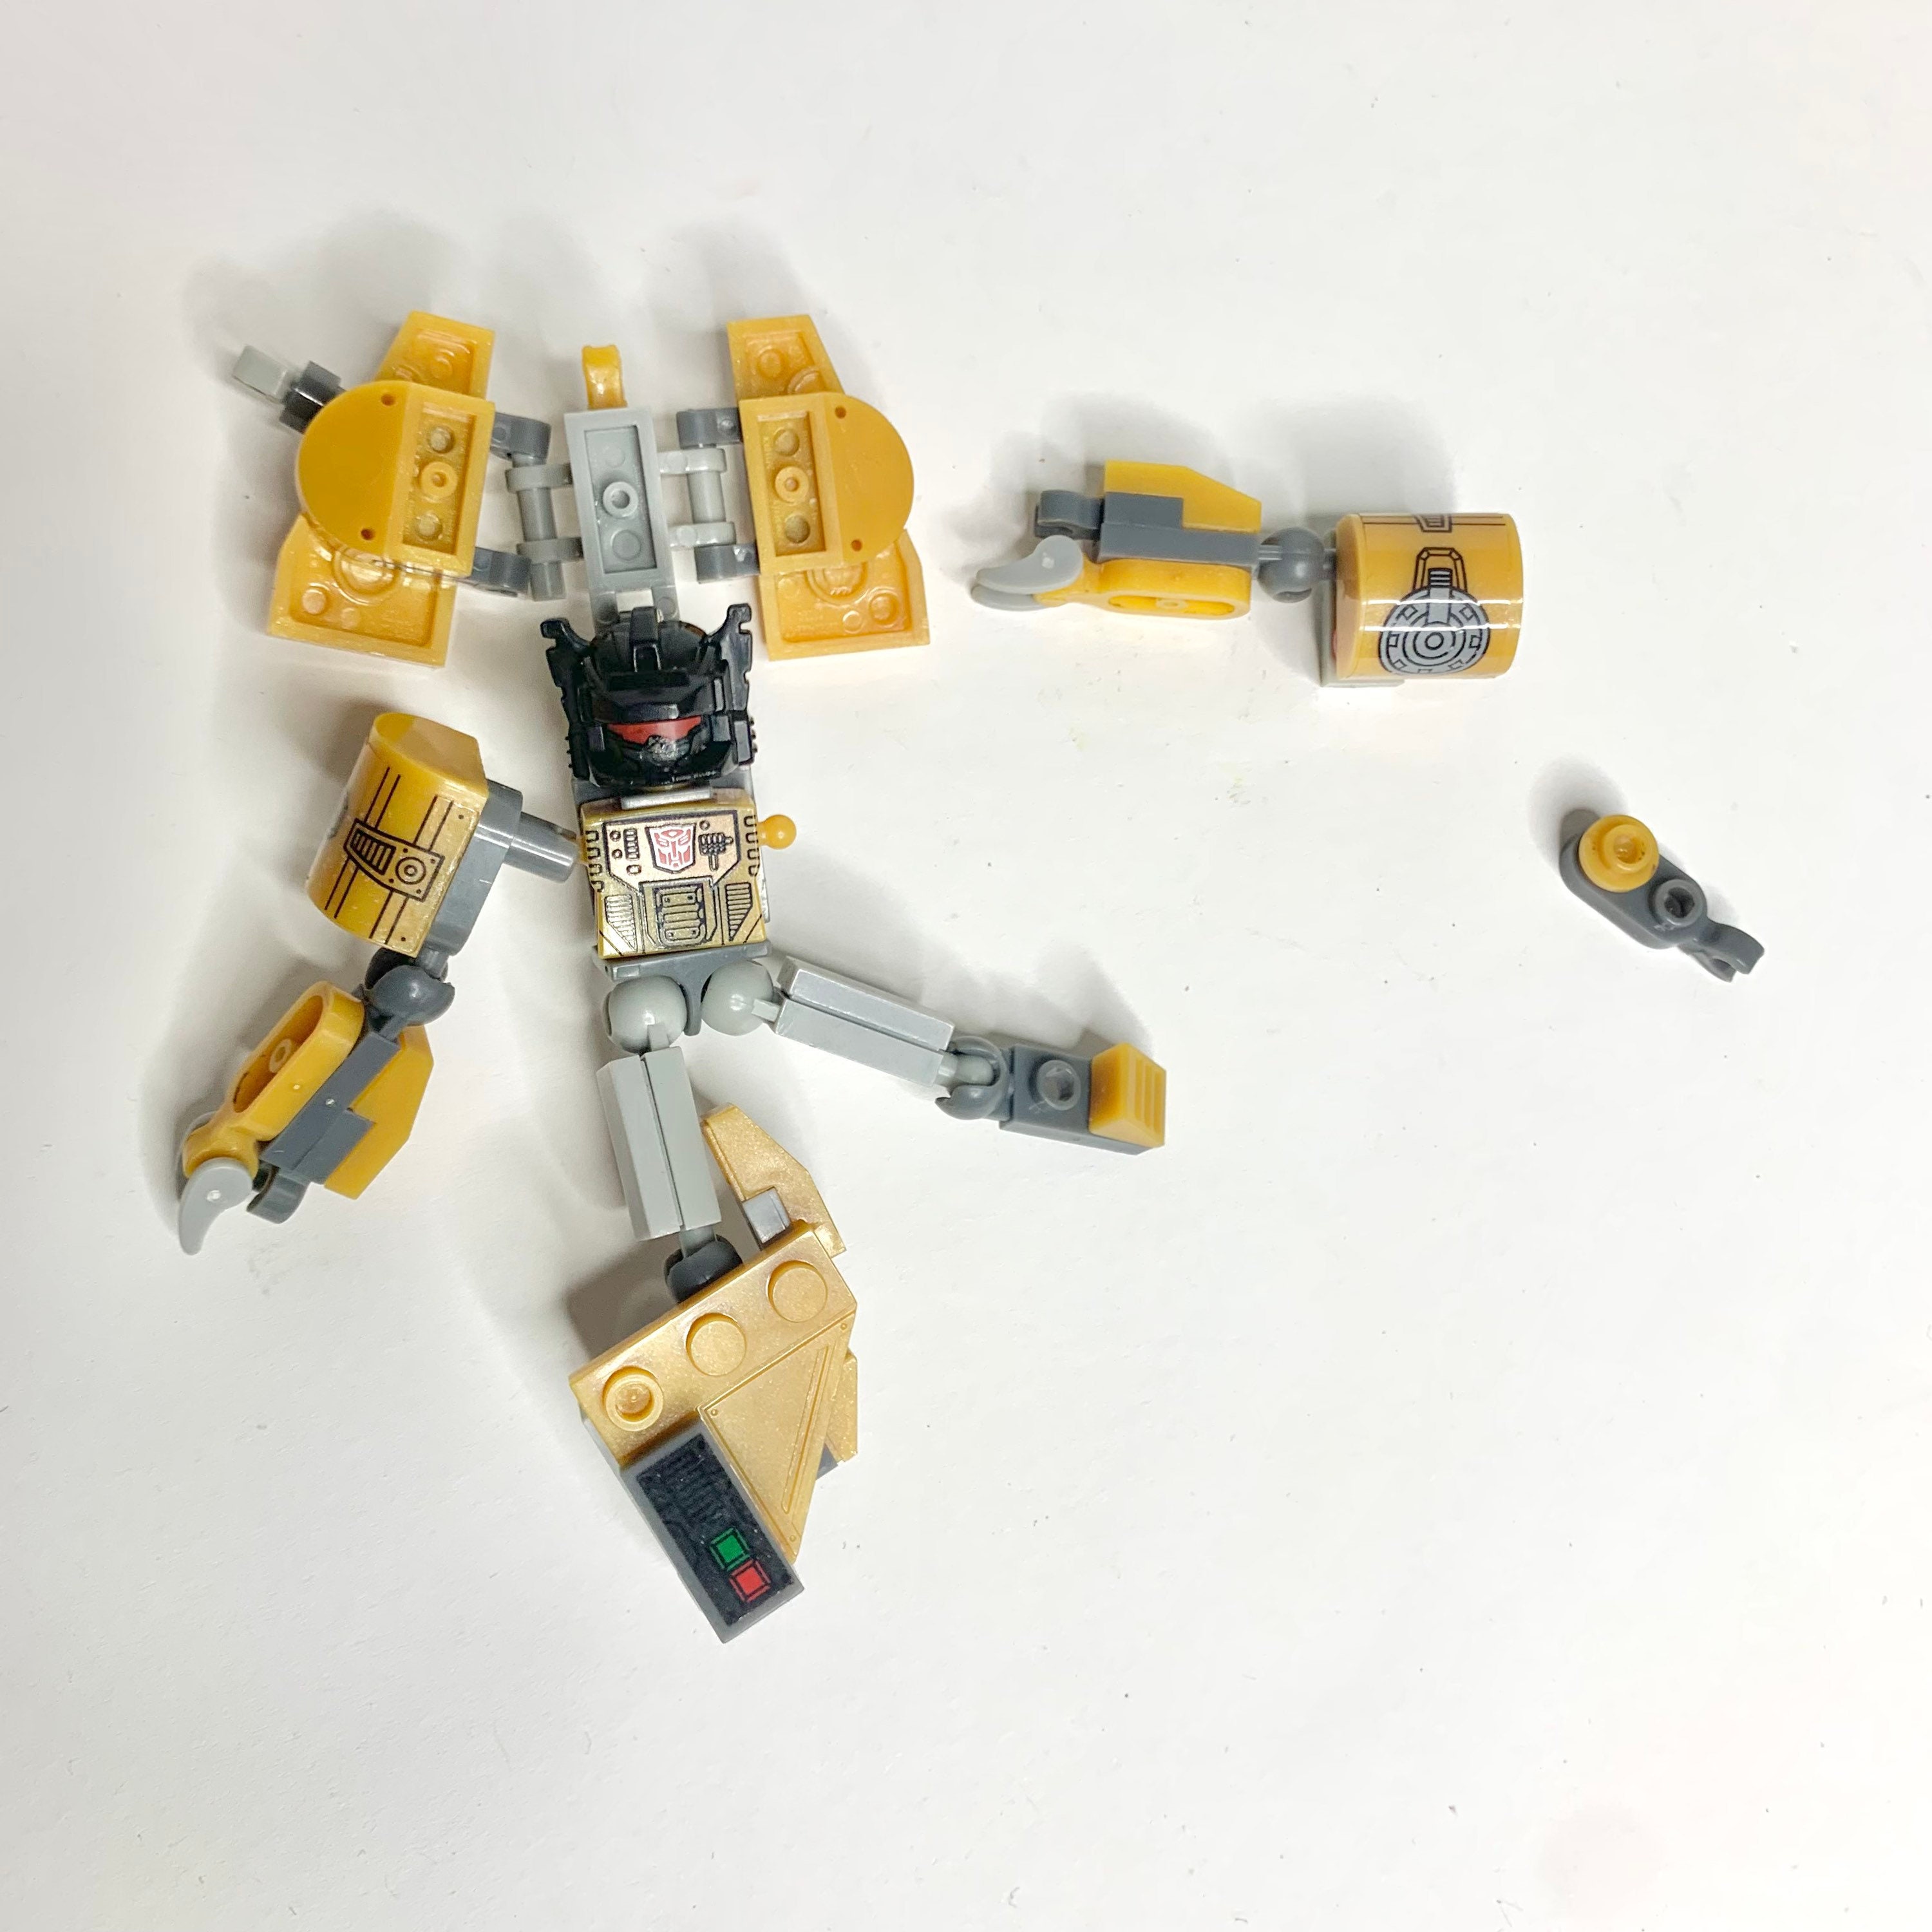 Lego Transformers Kre-o Yellow Toy Mini Figure incomplete 